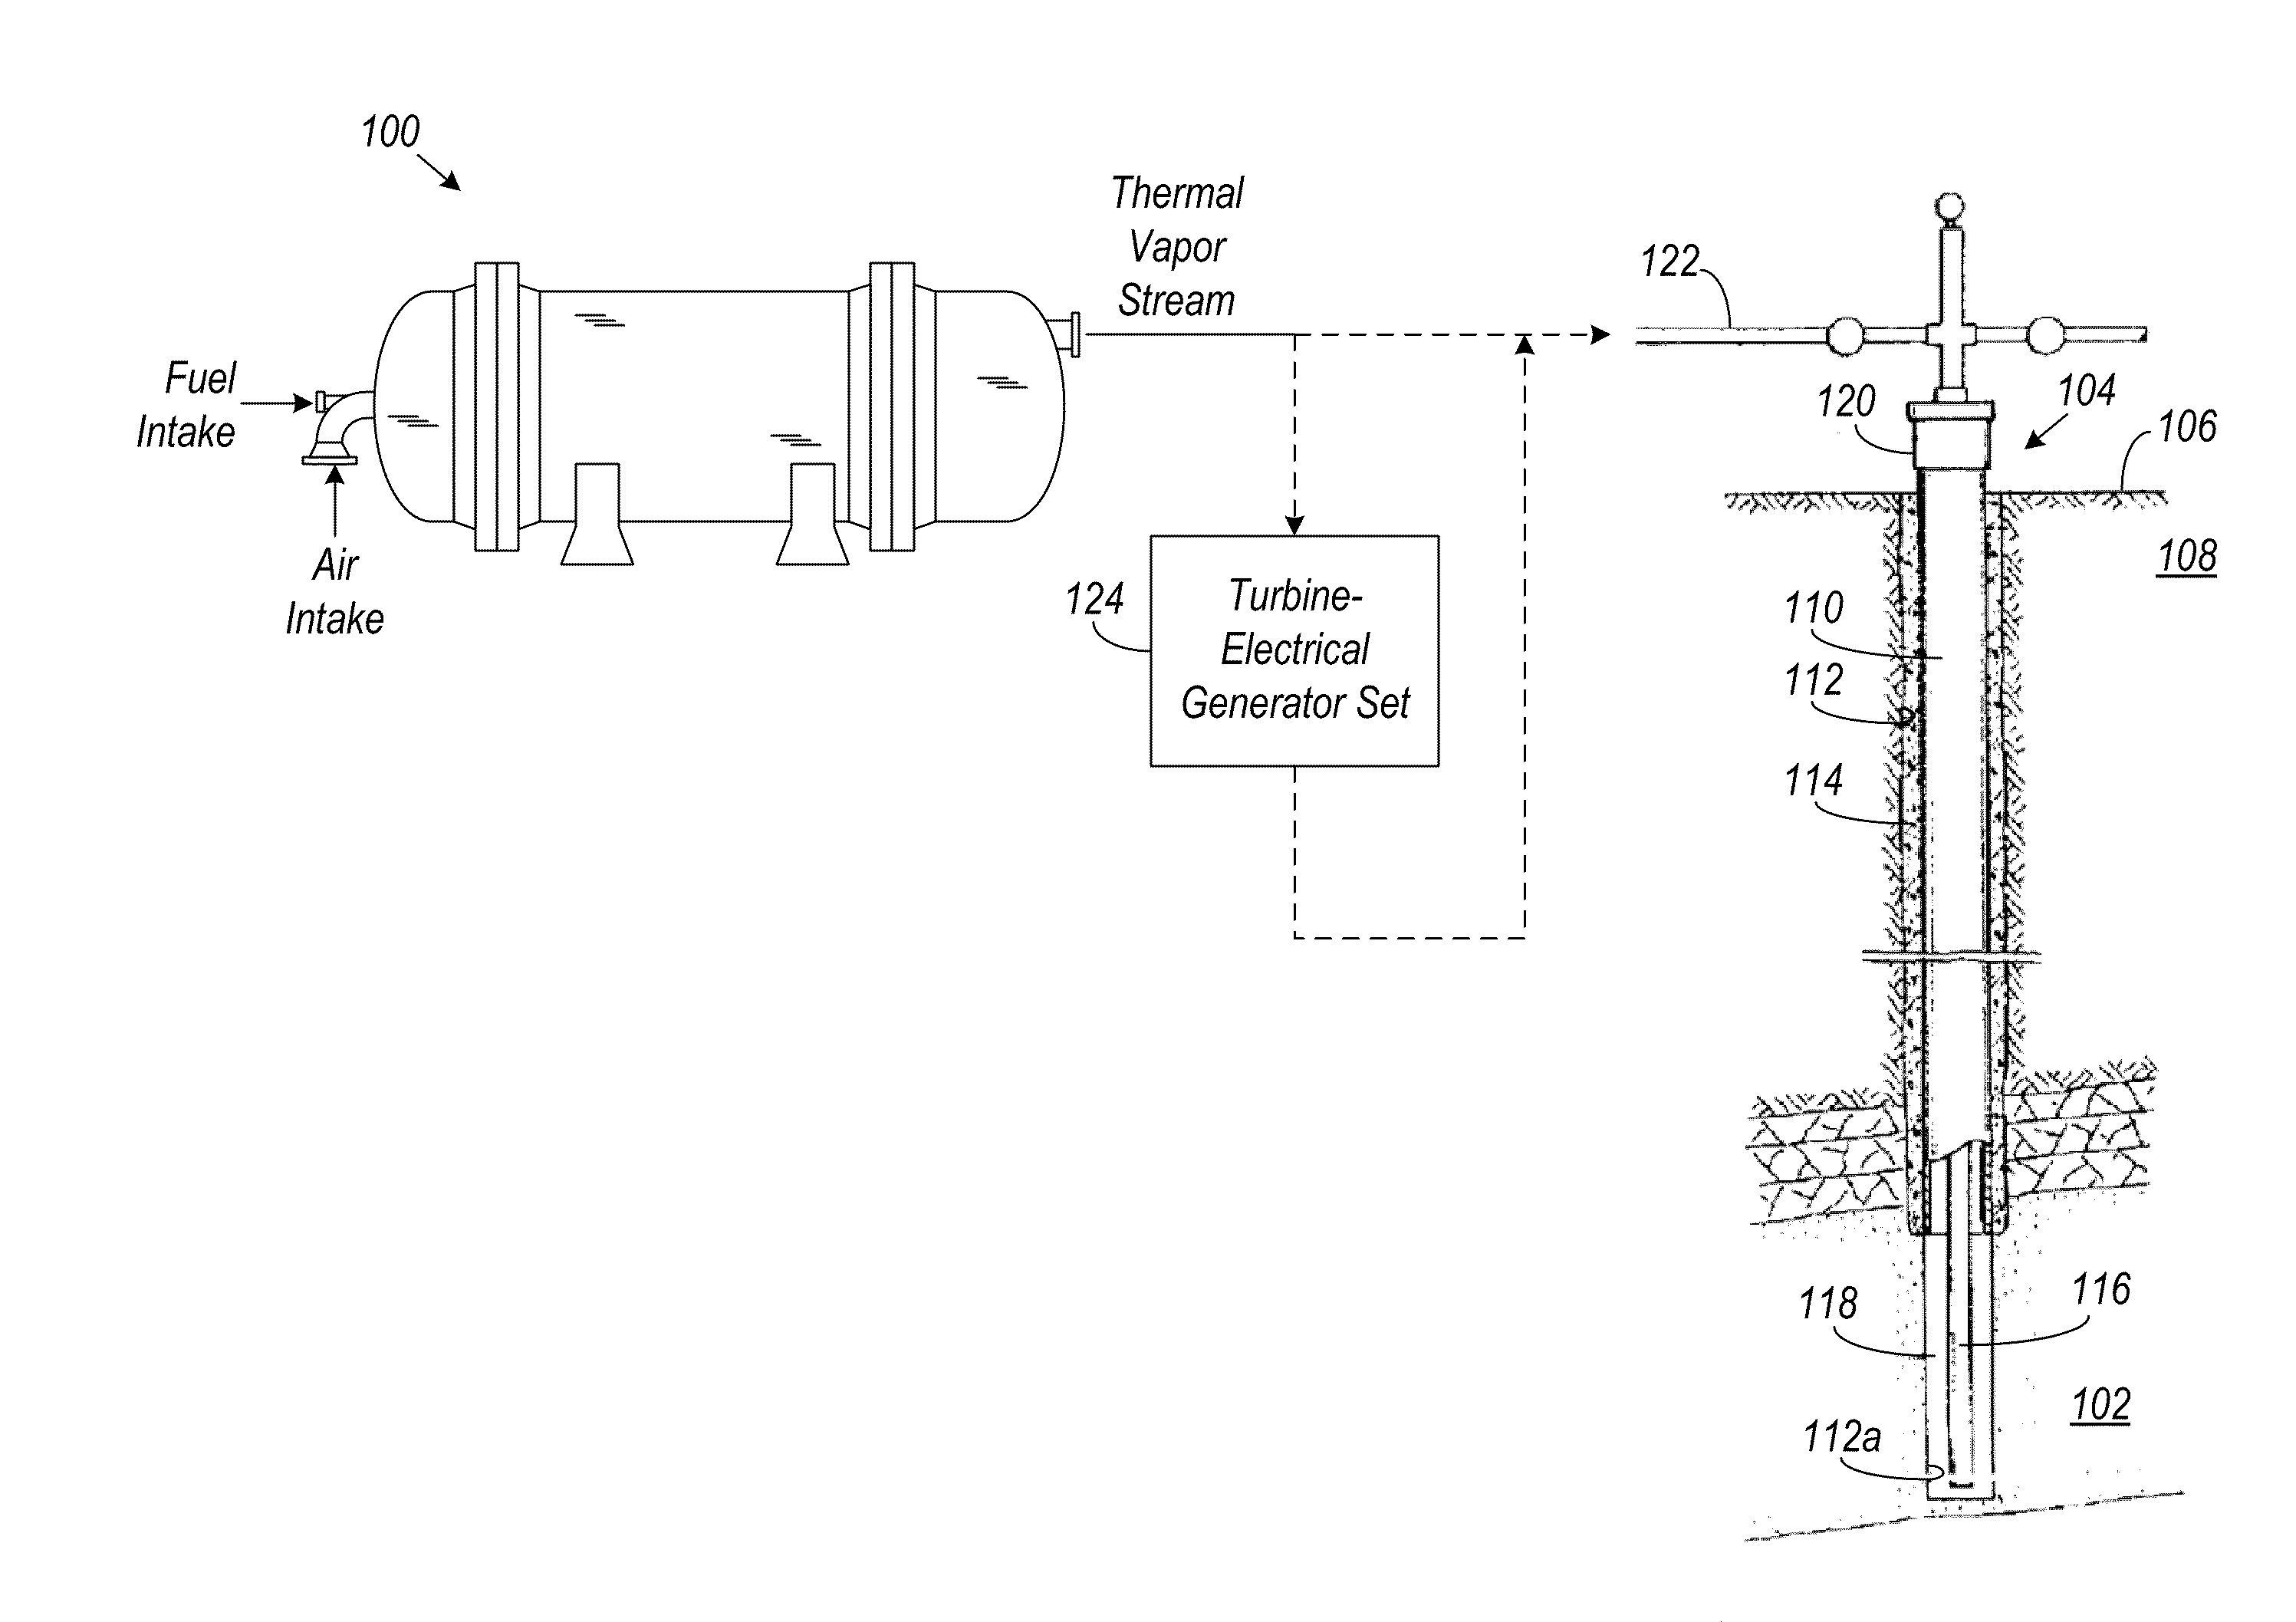 Thermal vapor stream apparatus and method